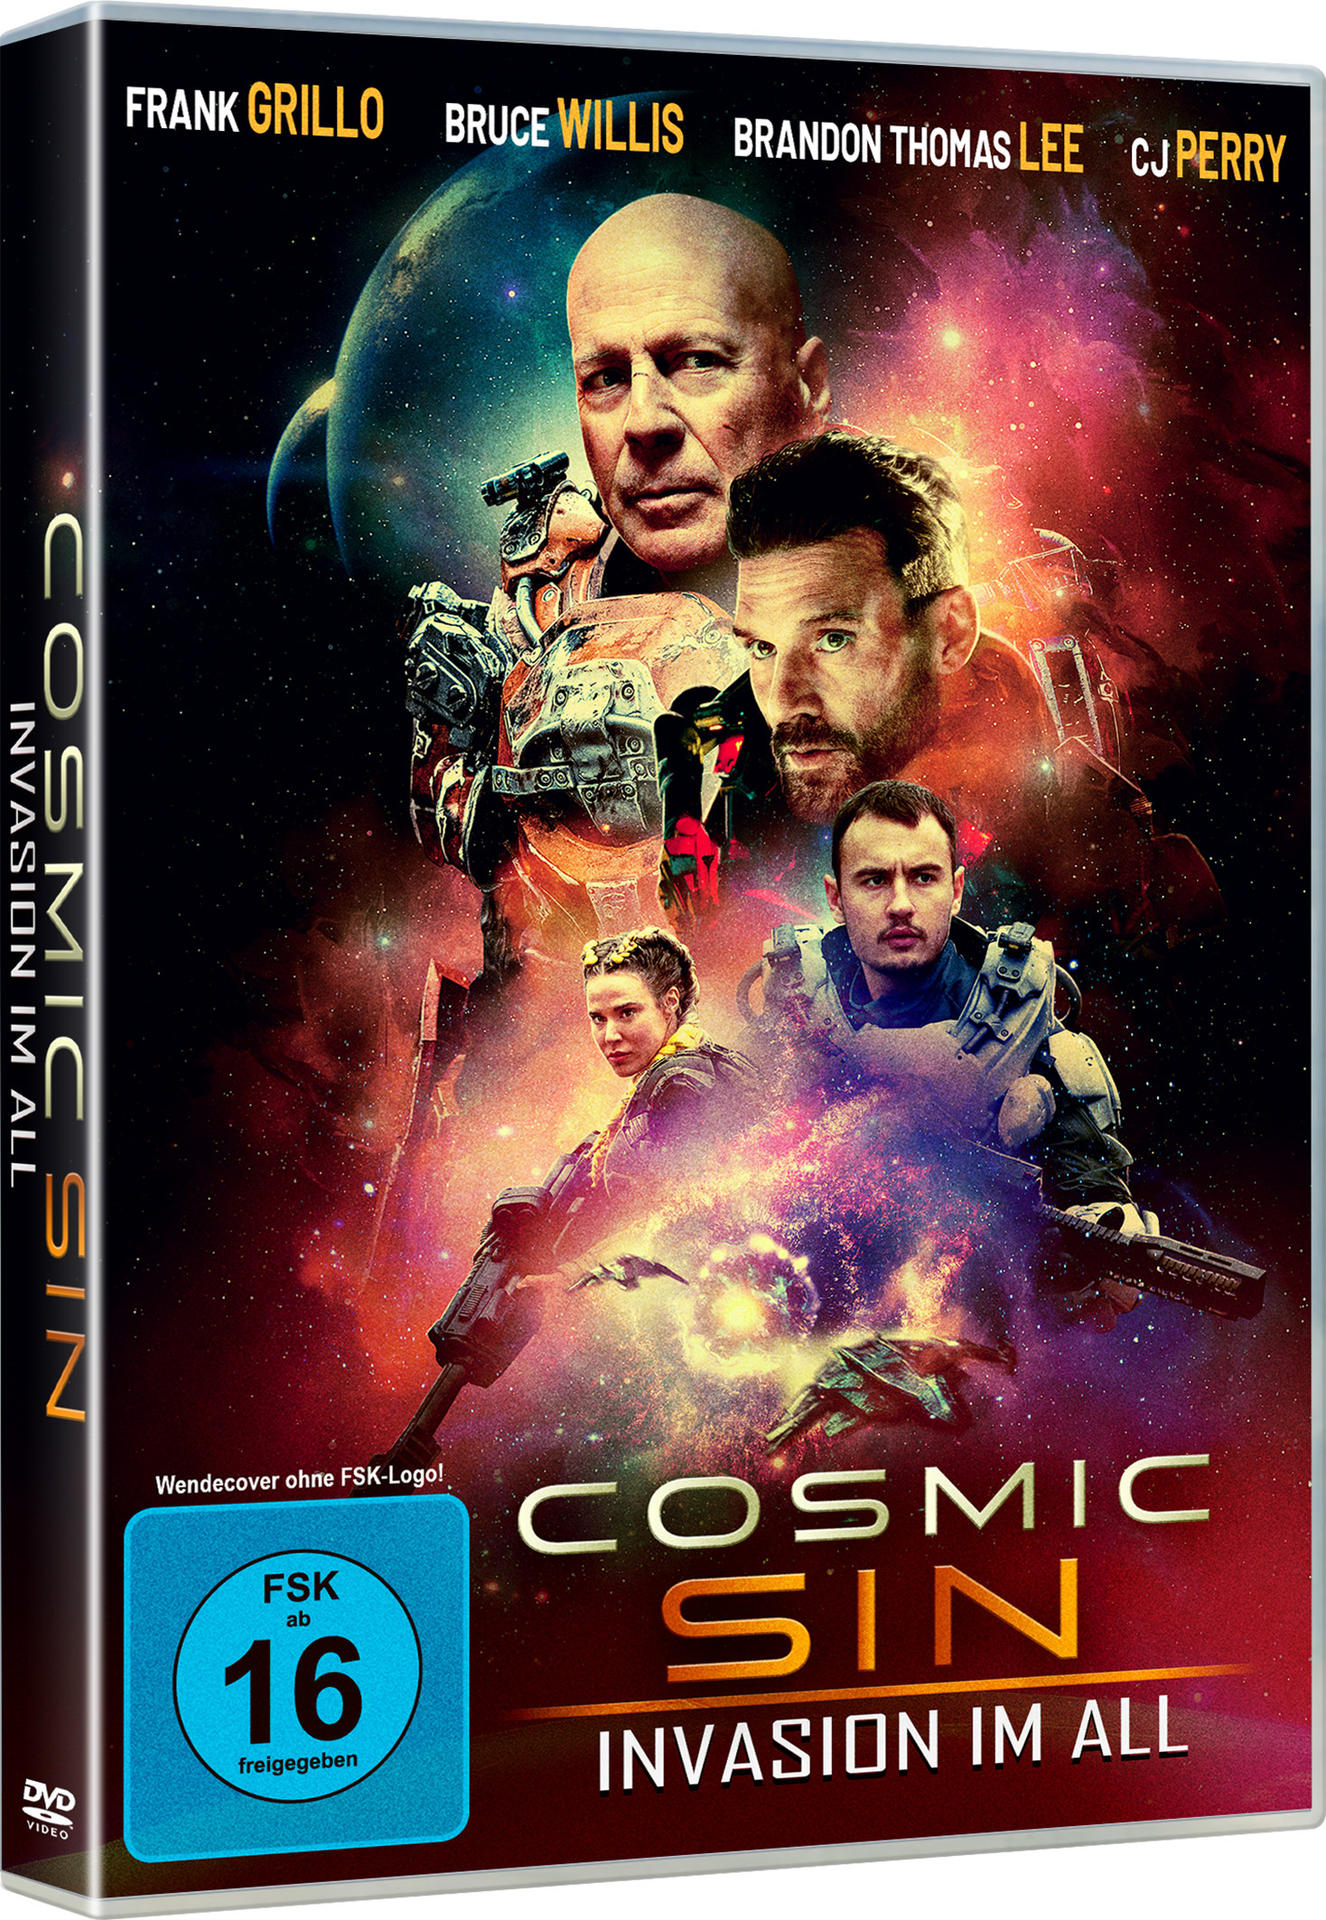 Cosmic Sin - All DVD Invasion im